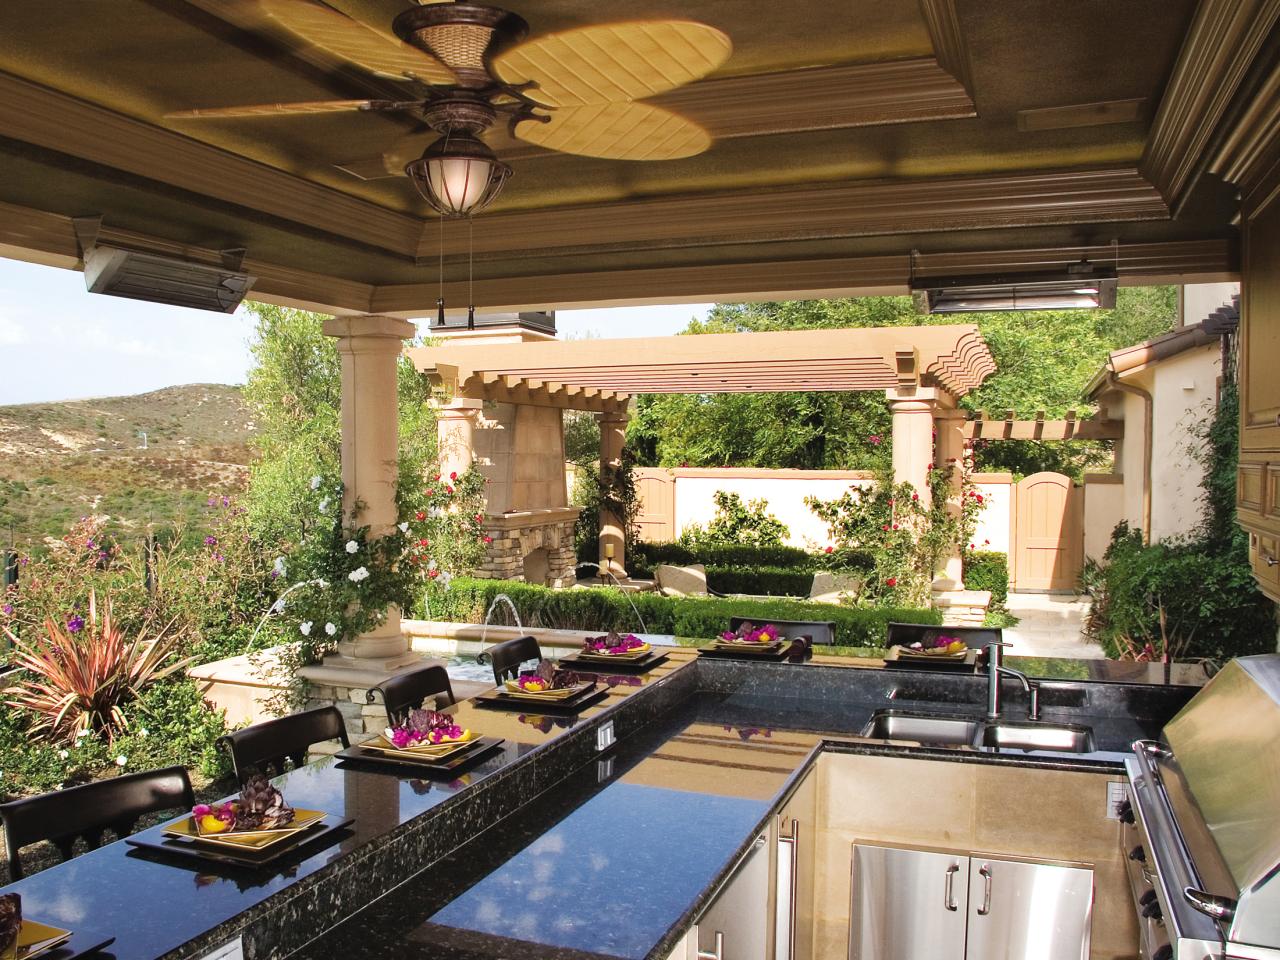 Outdoor Kitchen Countertops Options, Bbq Island Countertop Ideas